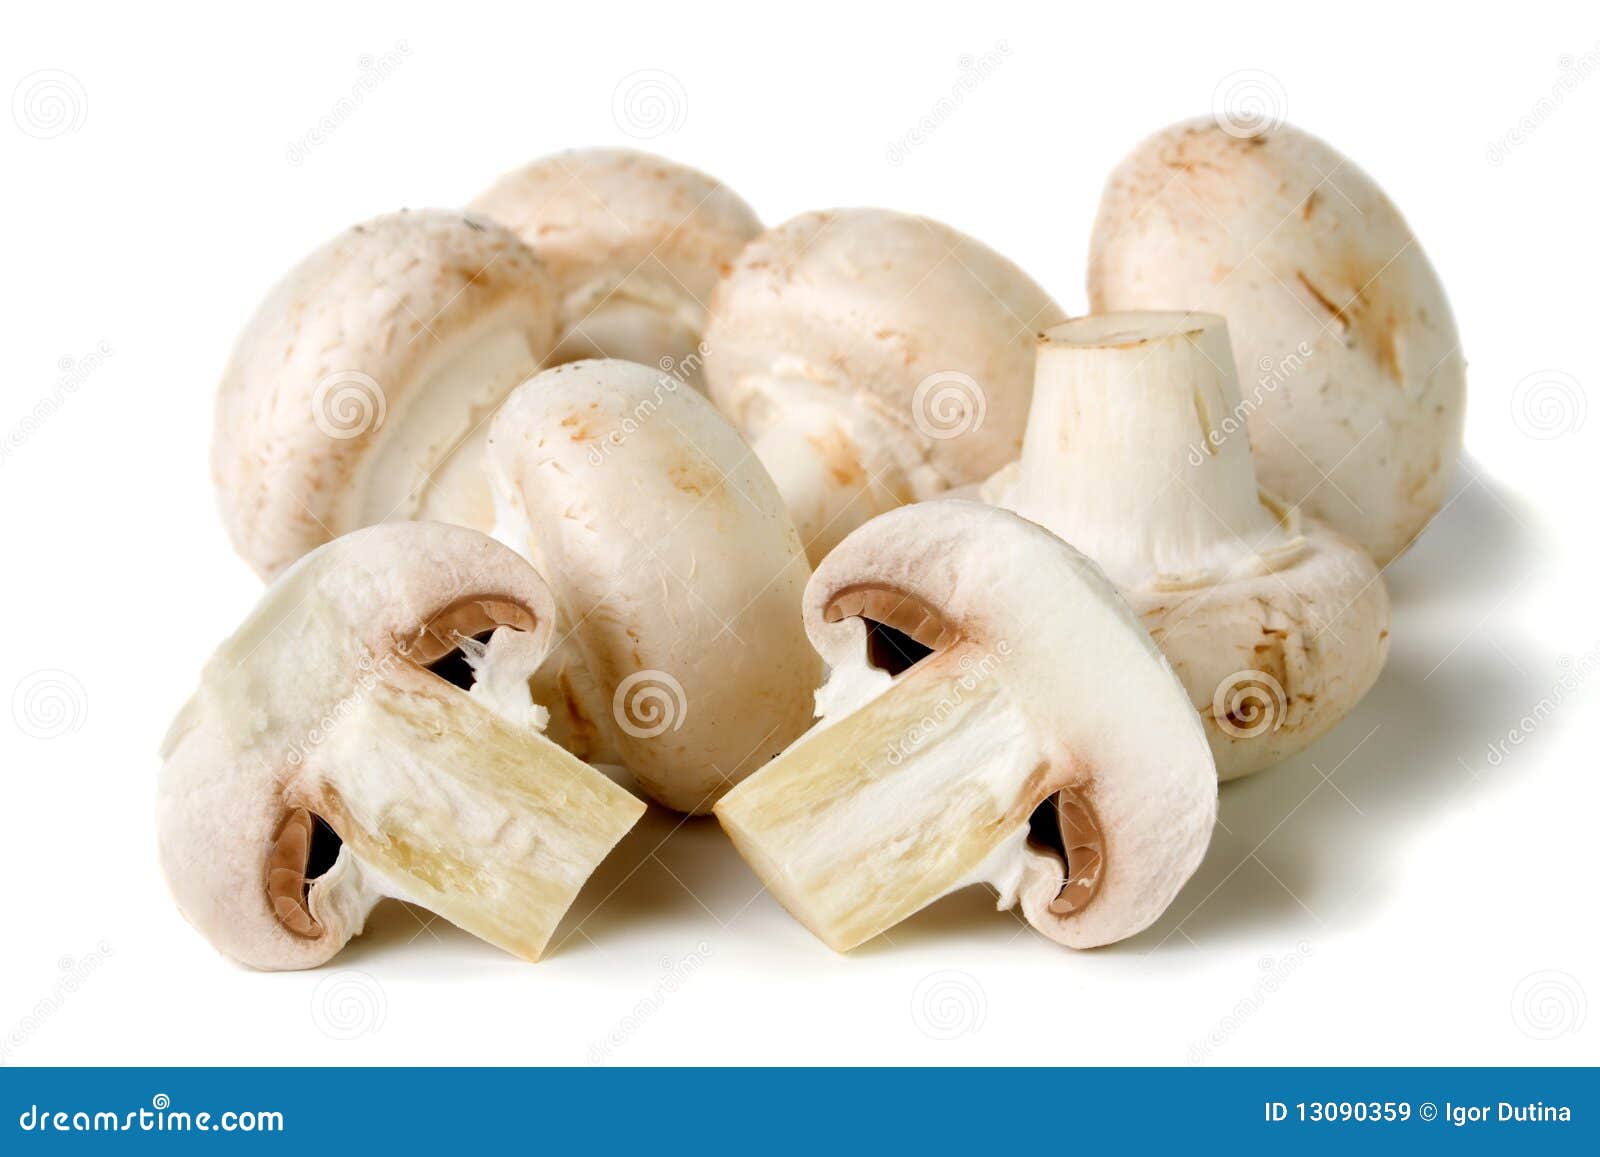 button mushroom  on white